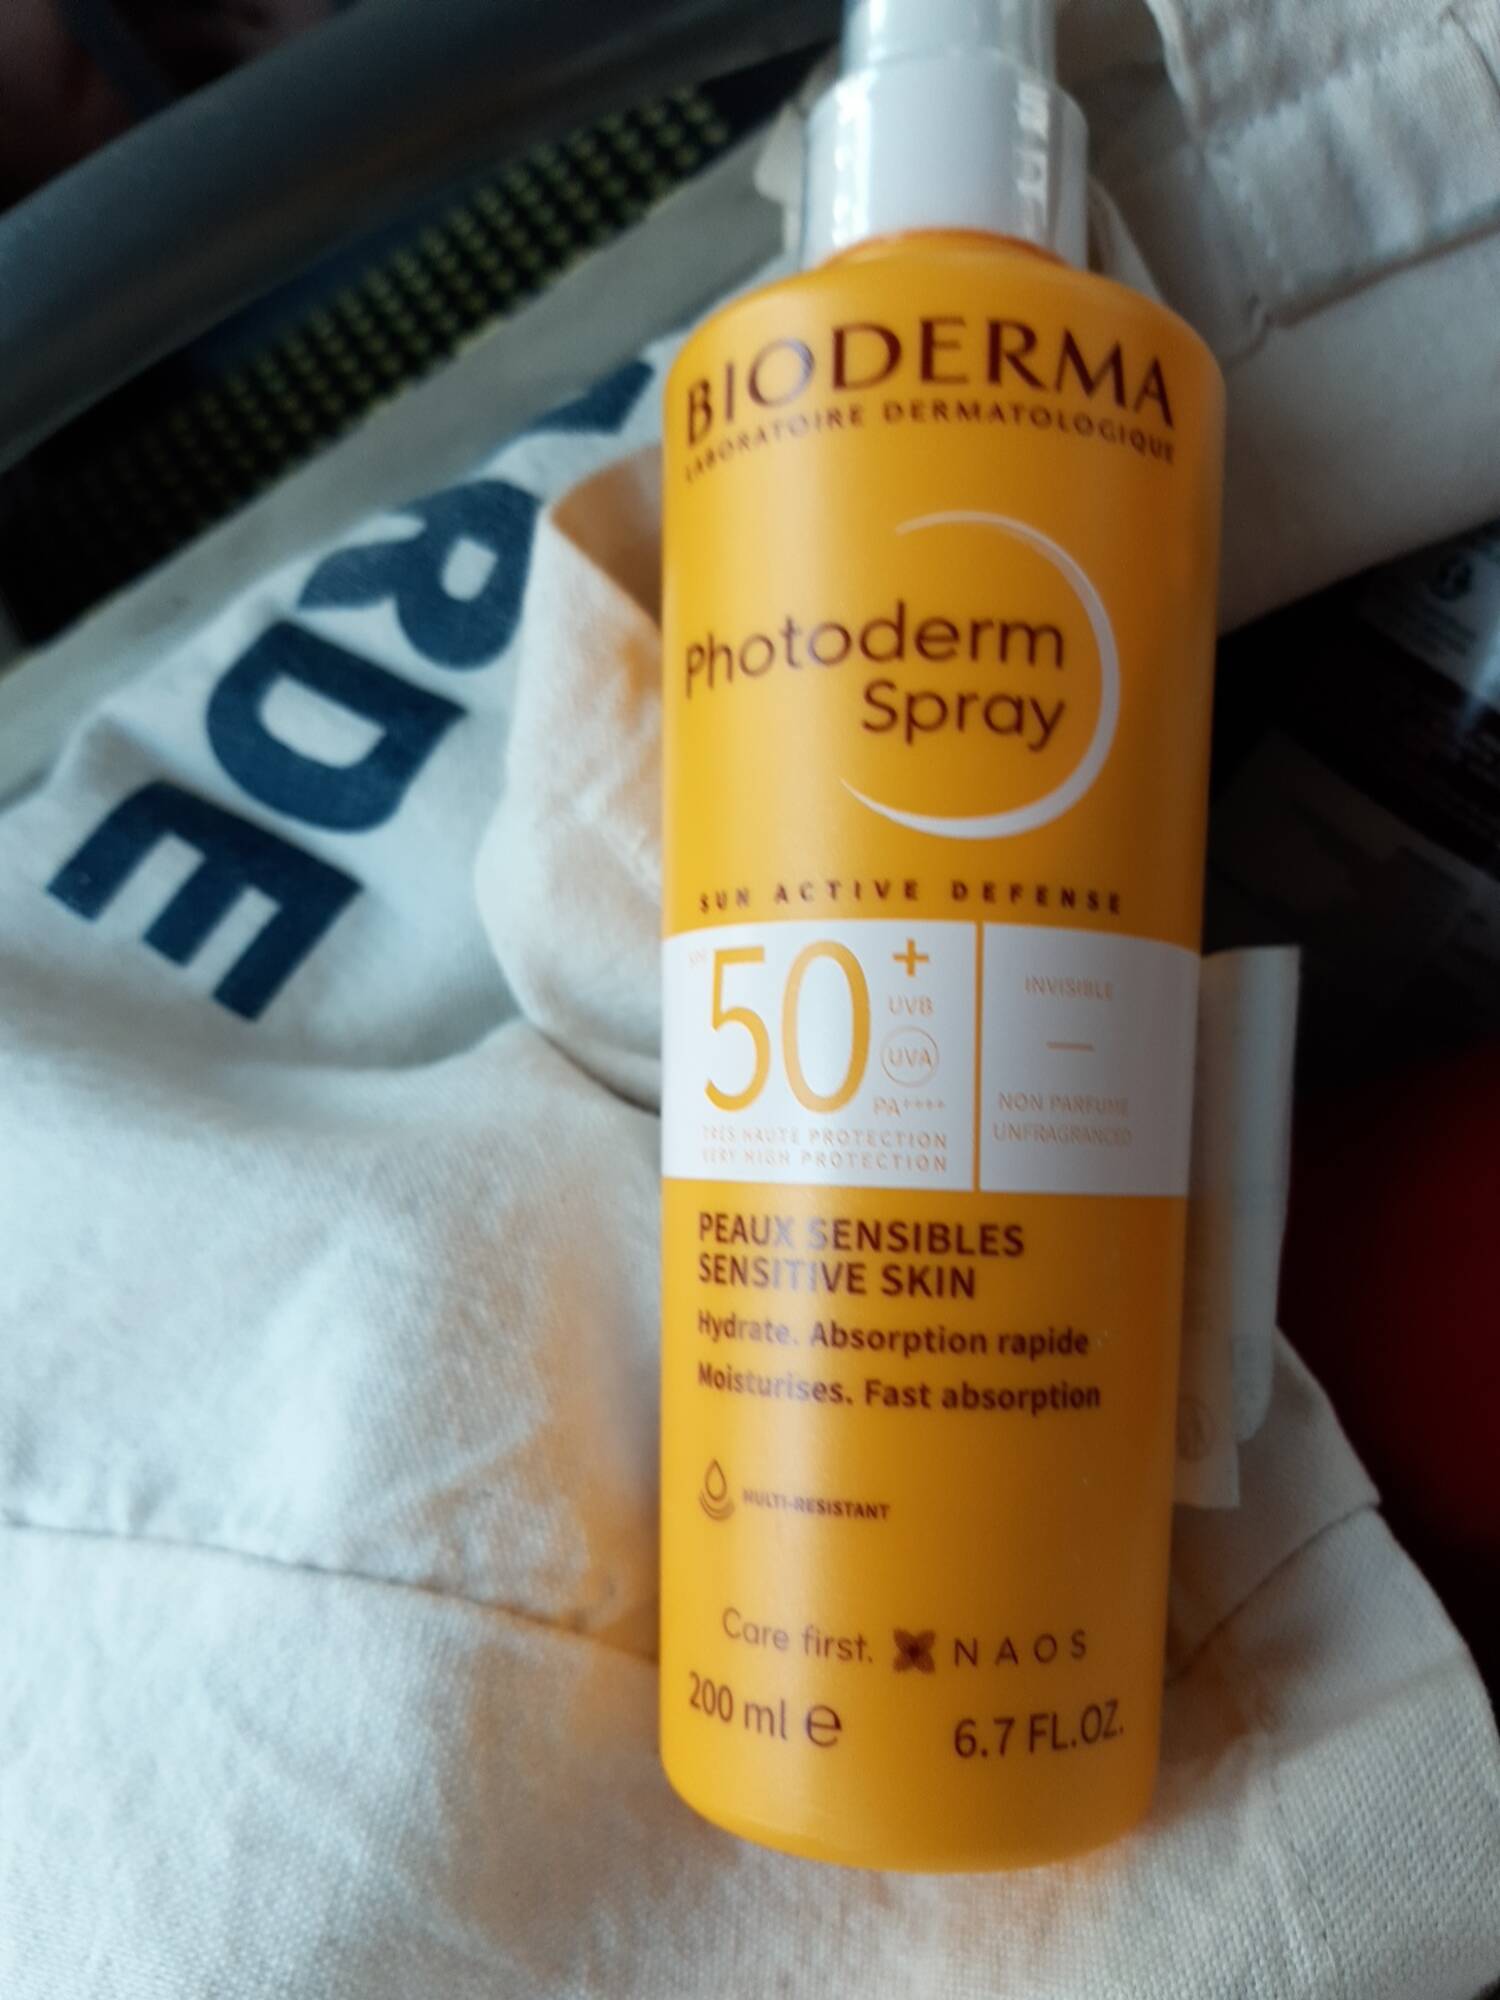 BIODERMA - Photoderm spray - Sun active defense 50+